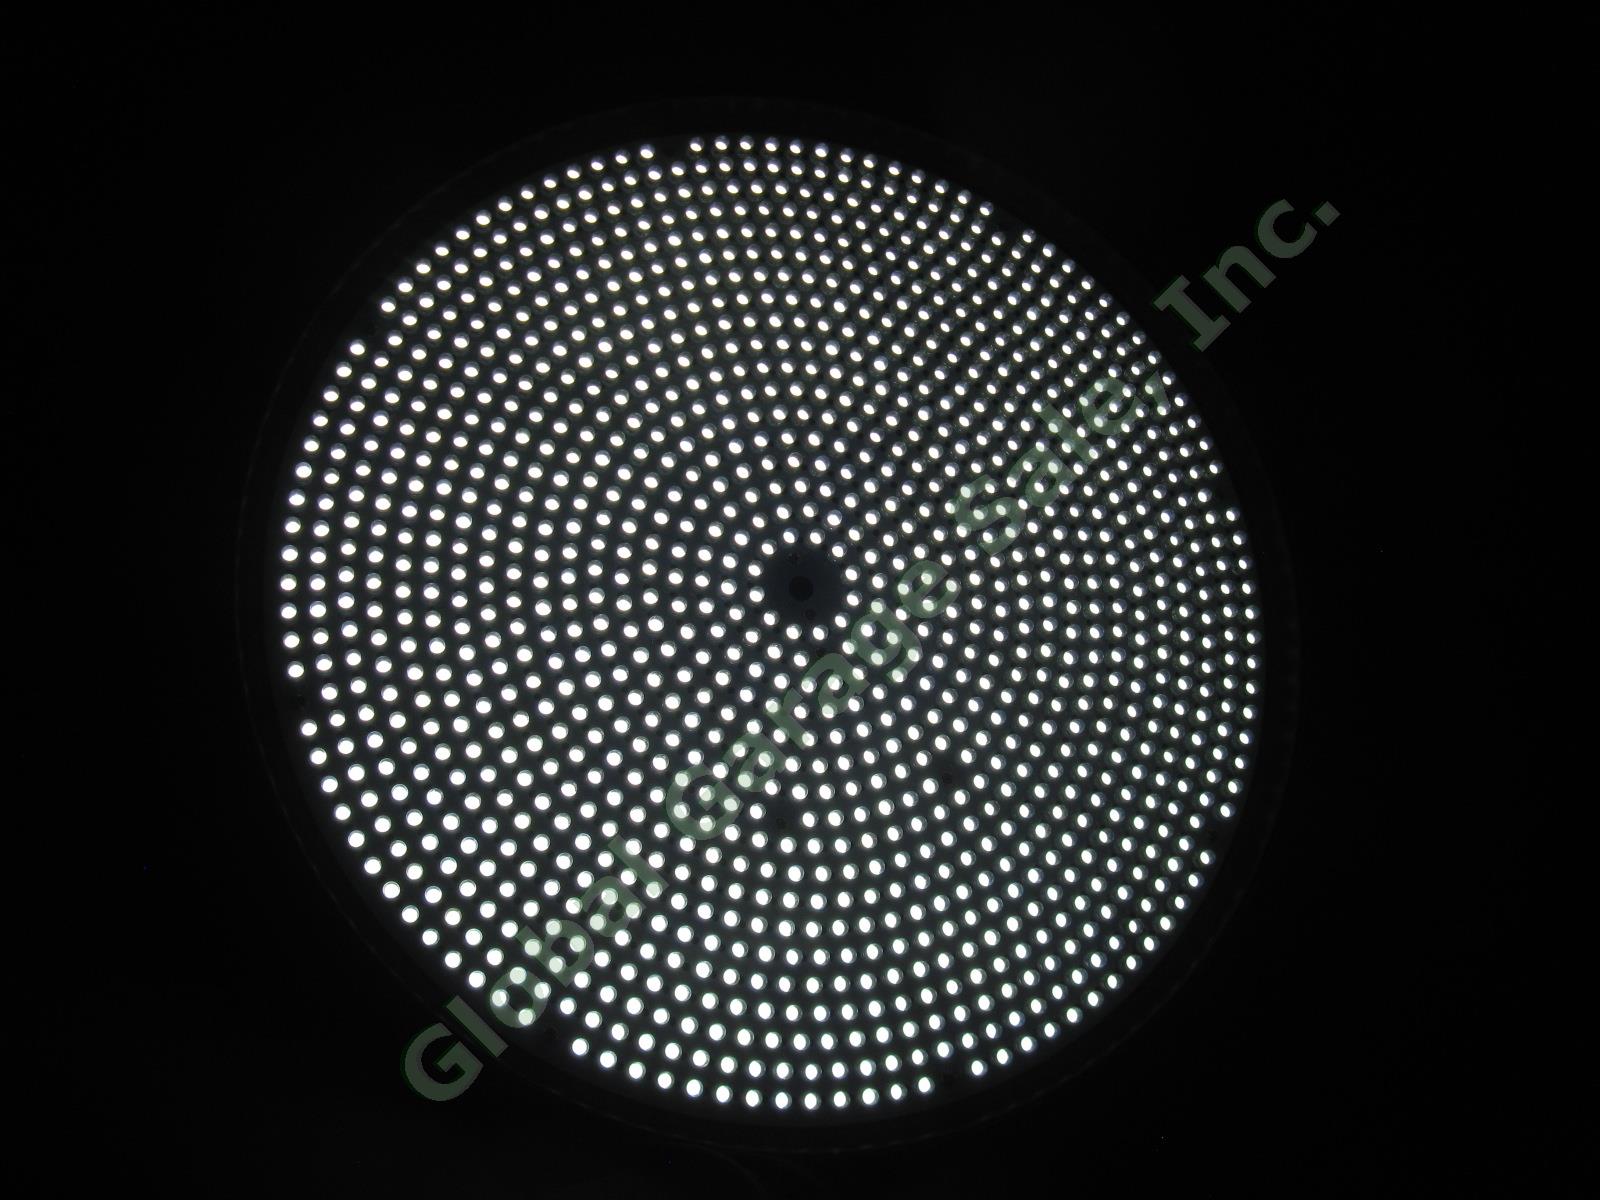 Genaray SpectroLED-14 75W AC/DC Daylight Balanced 5600K LED Light SP-AD75 $274 8